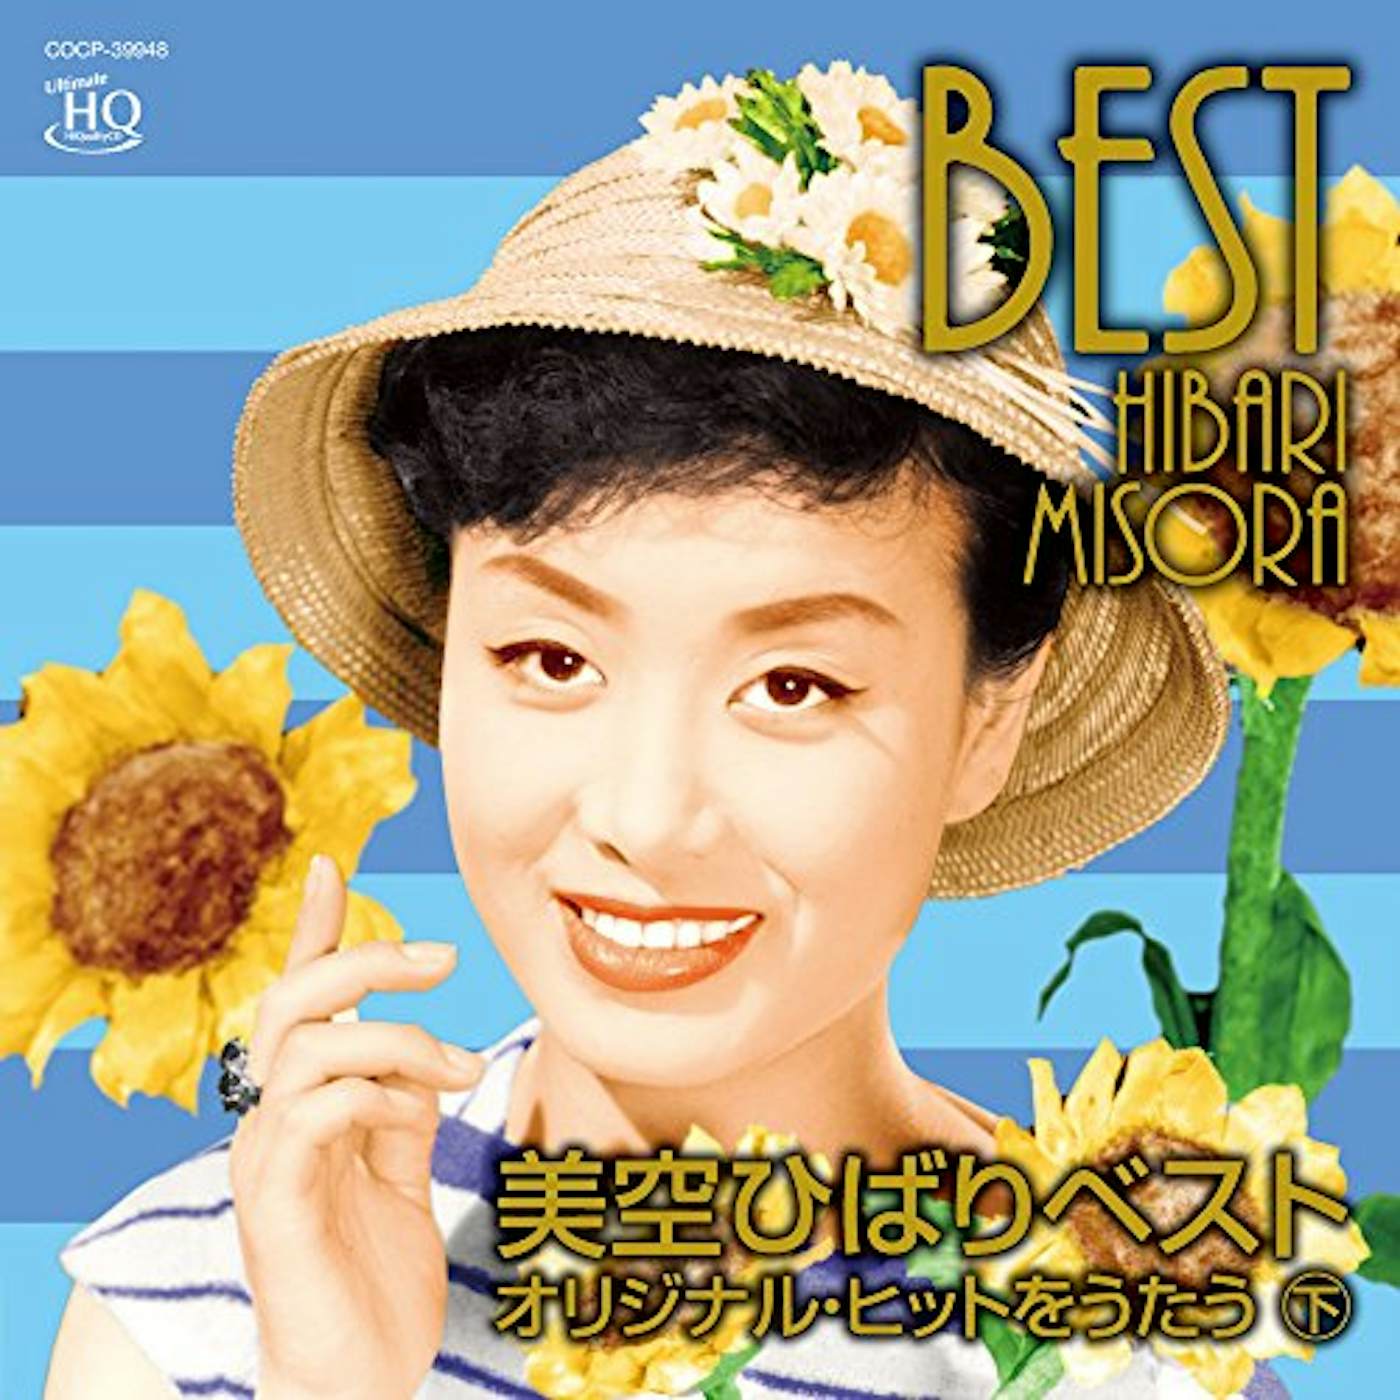 Hibari Misora BEST: ORIGINAL HITS VOL 2 CD